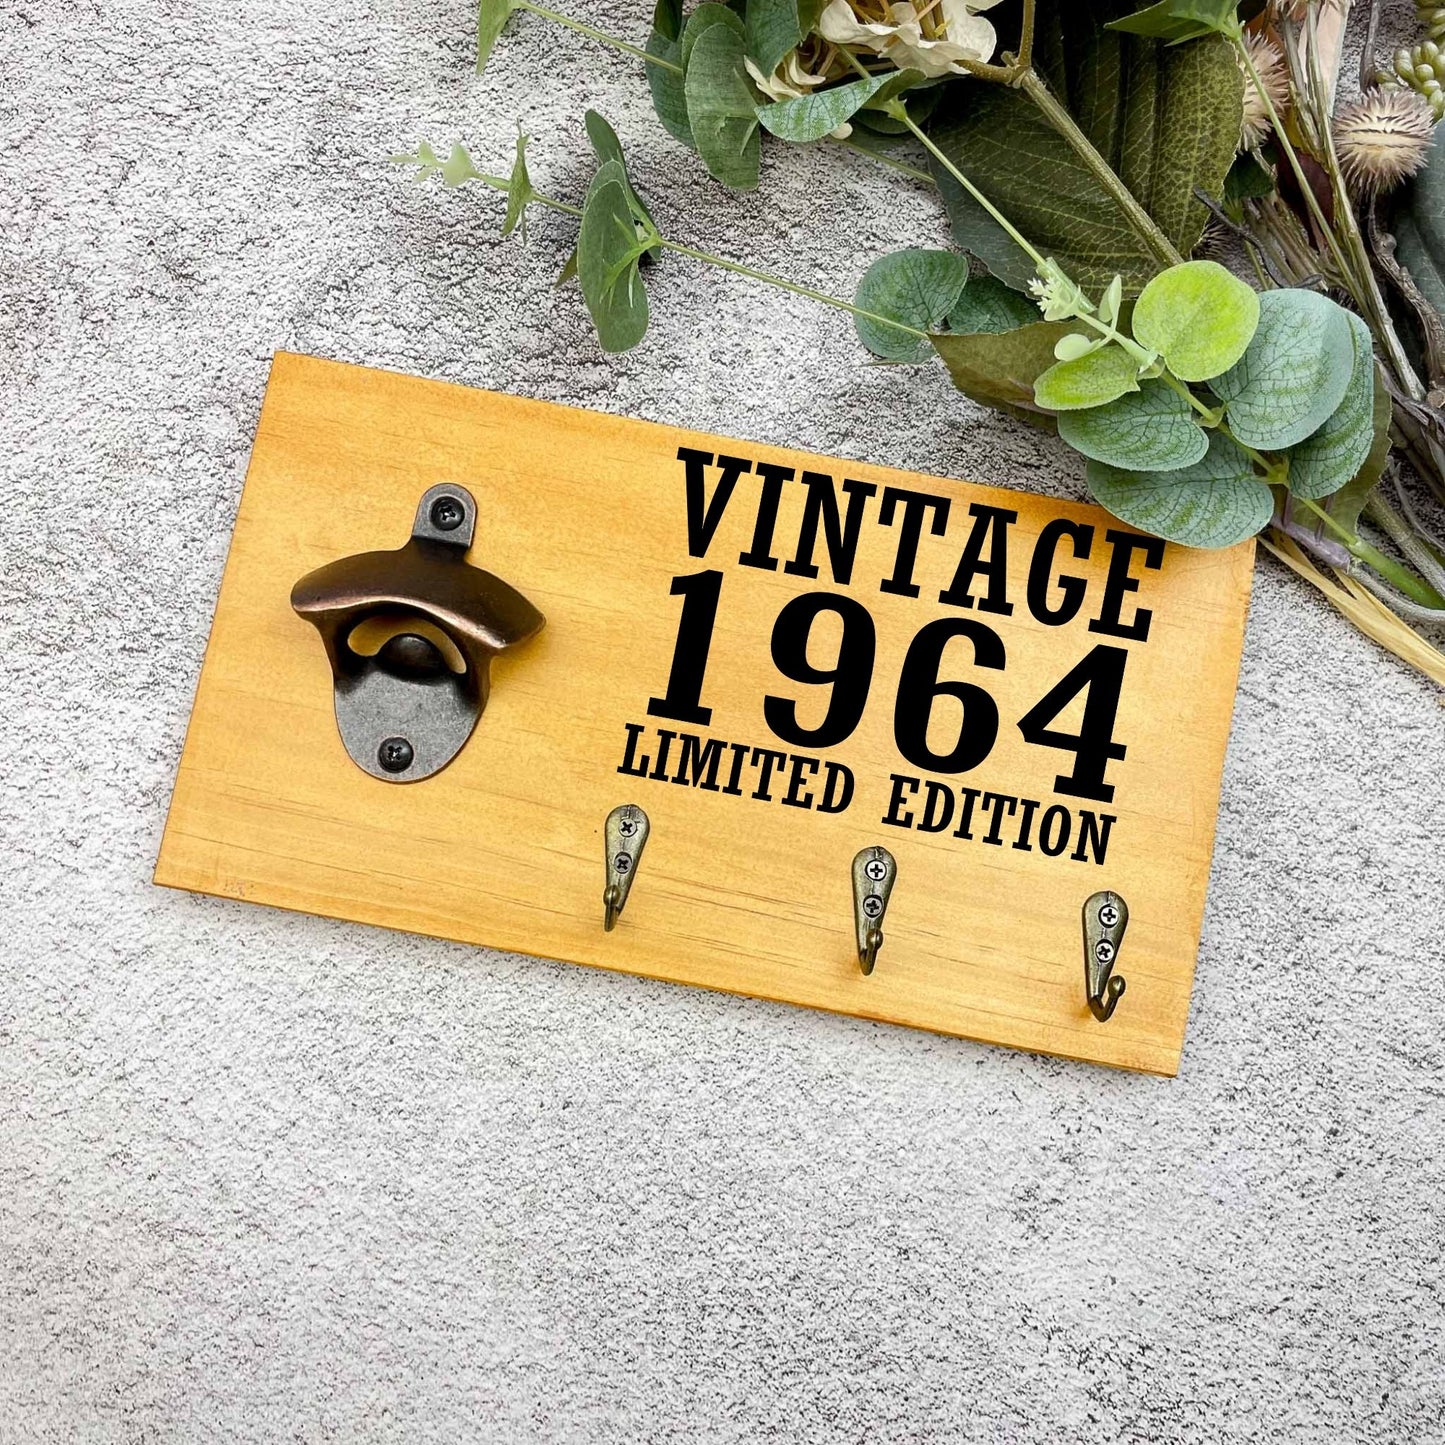 Vintage 60th Birthday beer sign, 1963 beer sign gift, 1964 birthday, 60th celebration, bottle opener sign